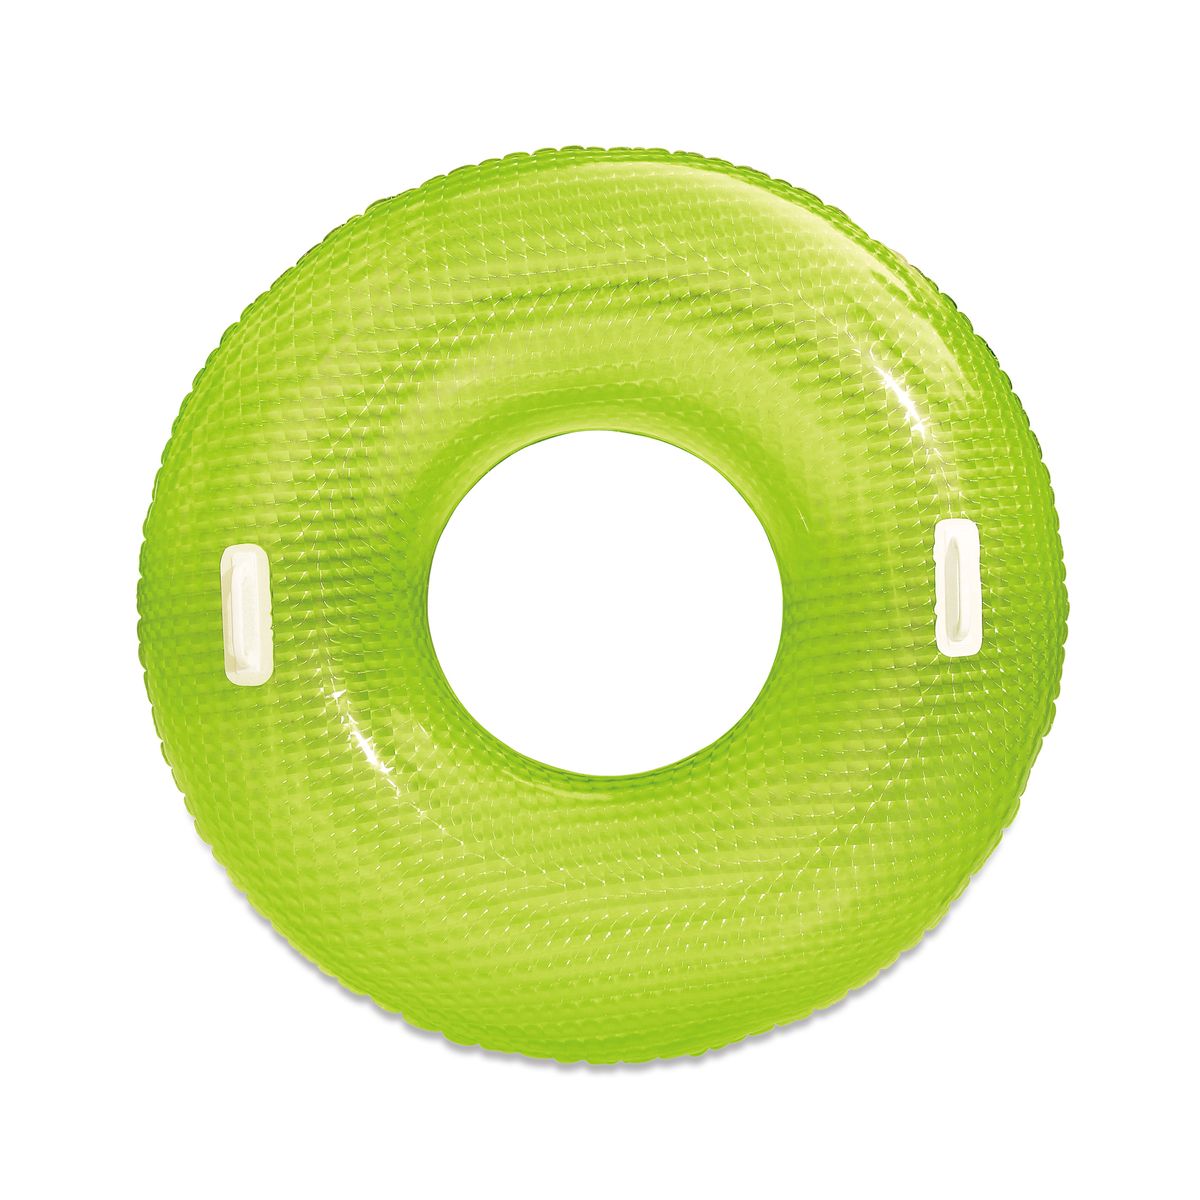 [RDY] [送料無料] Play Day 子供および大人のための膨脹可能なダイヤモンドの水泳の管のプールの浮遊物、緑、男女兼用 [楽天海外通販] | Play Day Inflatable Diamond Swim Tube Pool Float, Green, for Kids and Adul